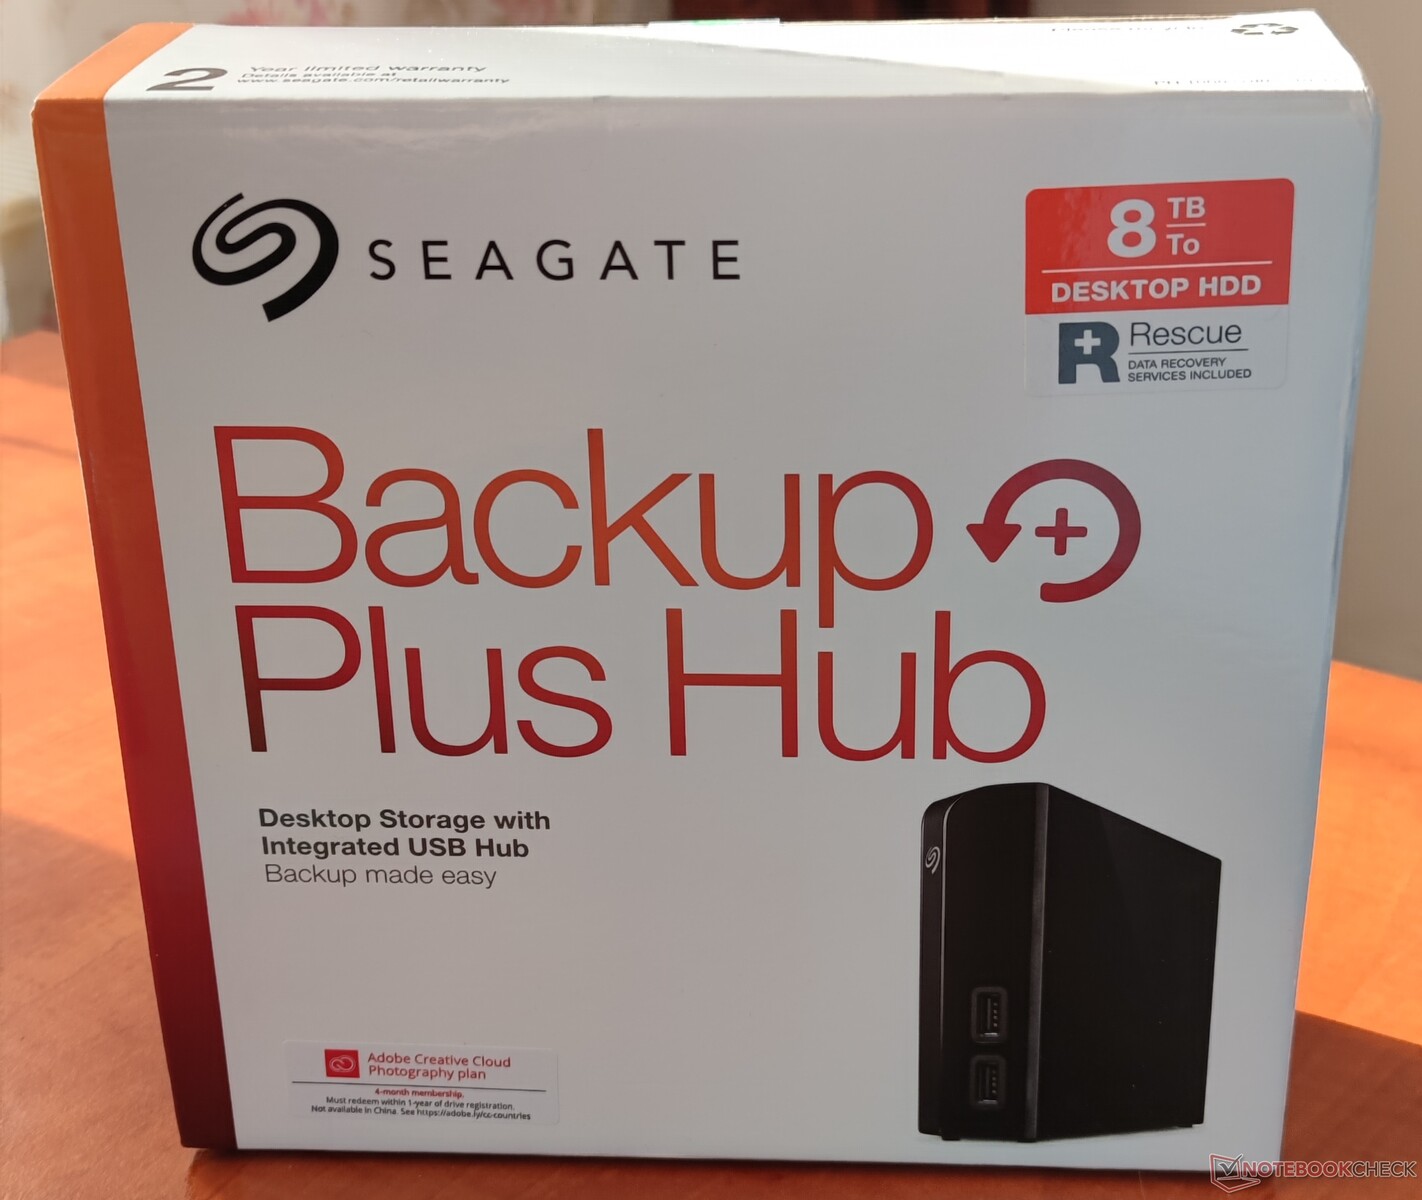 Seagate Backup Plus Hub (8TB) review: Massive, fast external hard drive